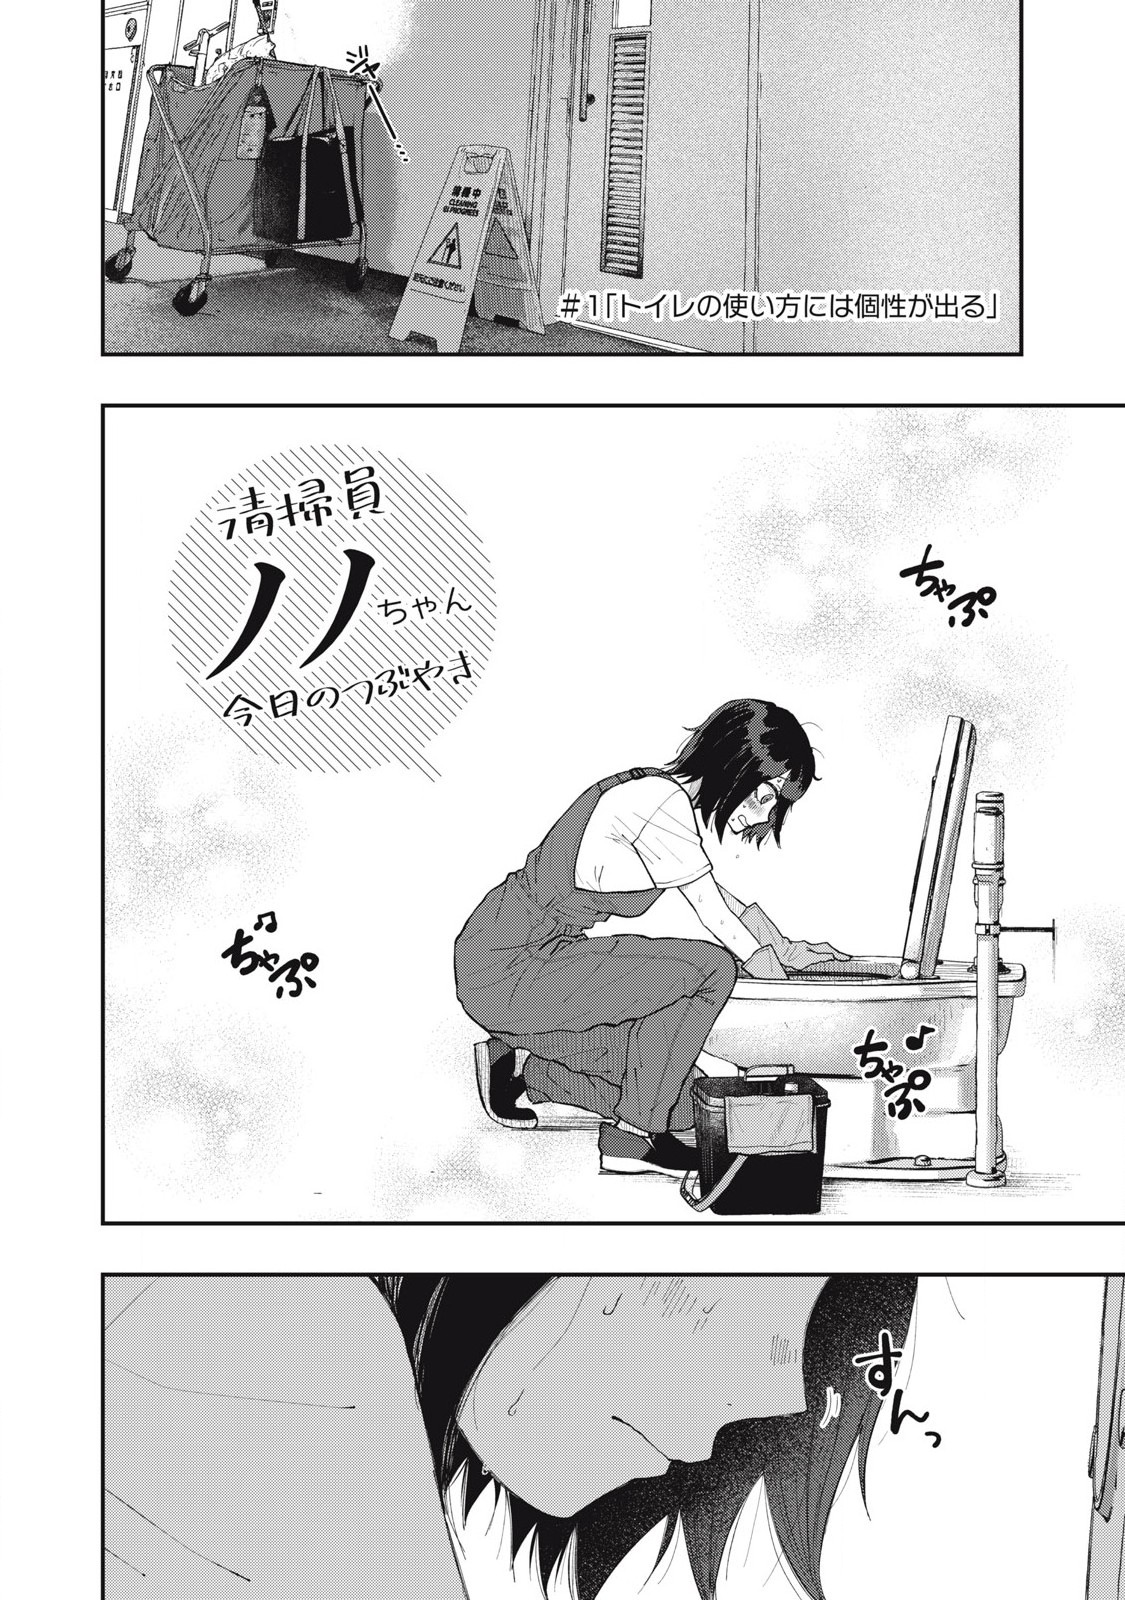 Seisouin Nono-chan Kyou no Tsubuyaki - Chapter 1 - Page 2